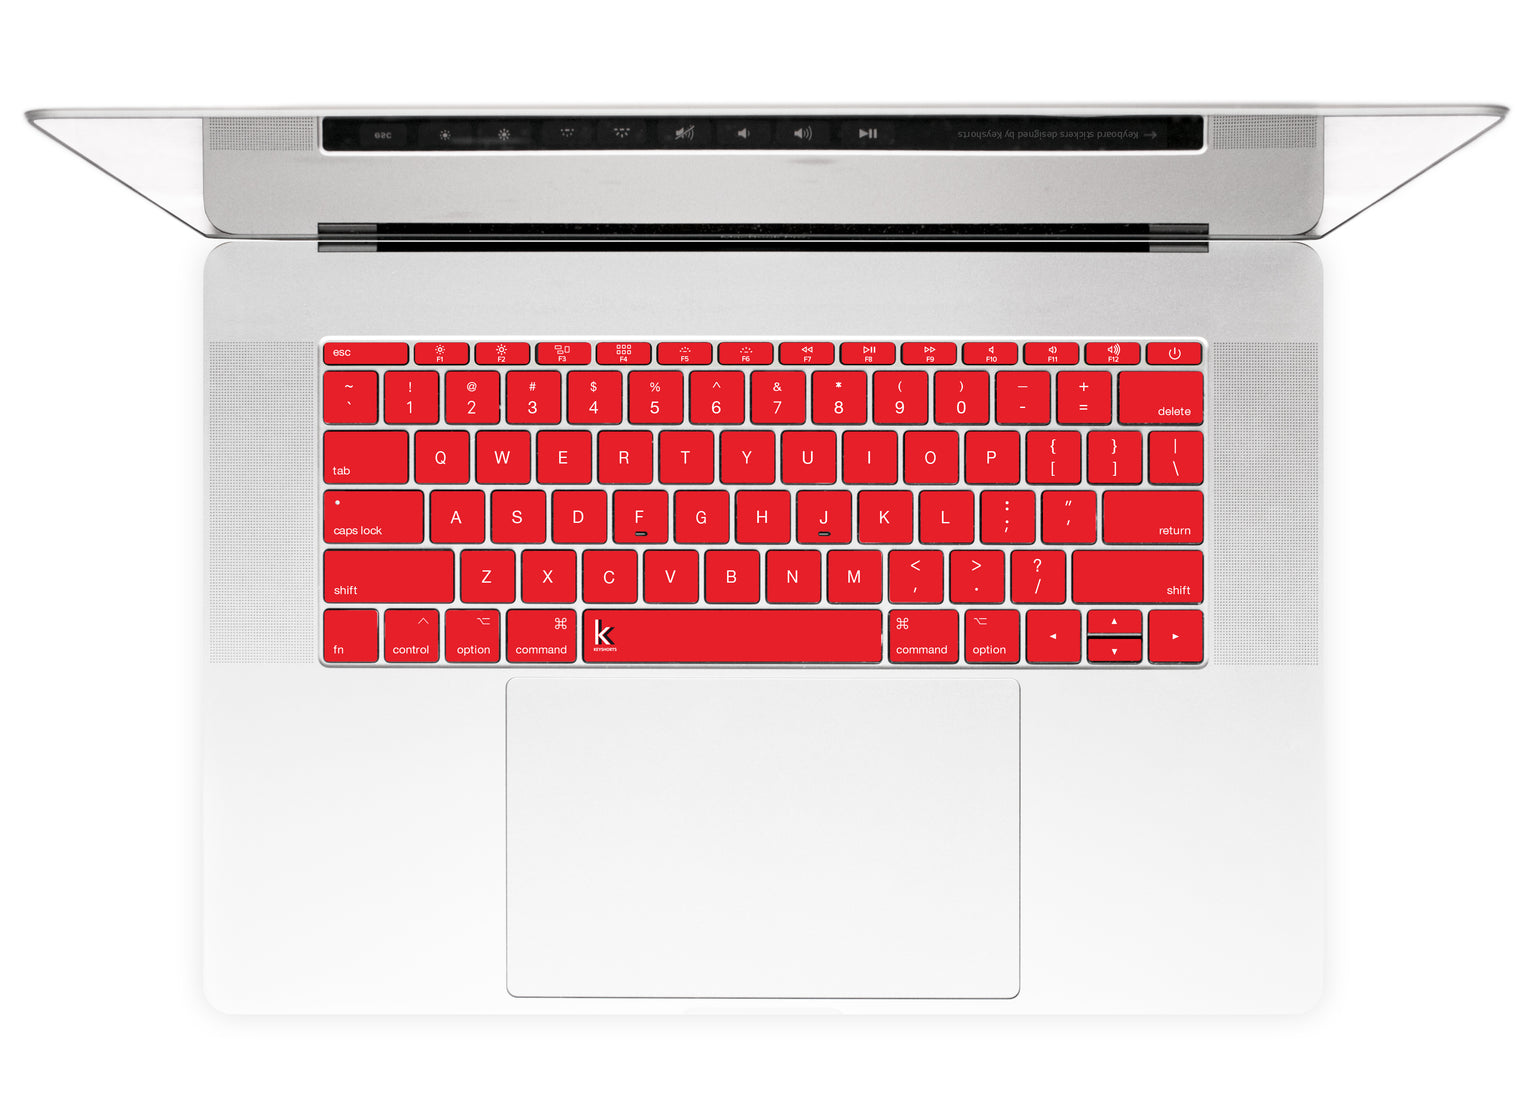 Devil Red MacBook Keyboard Stickers decals key overlays